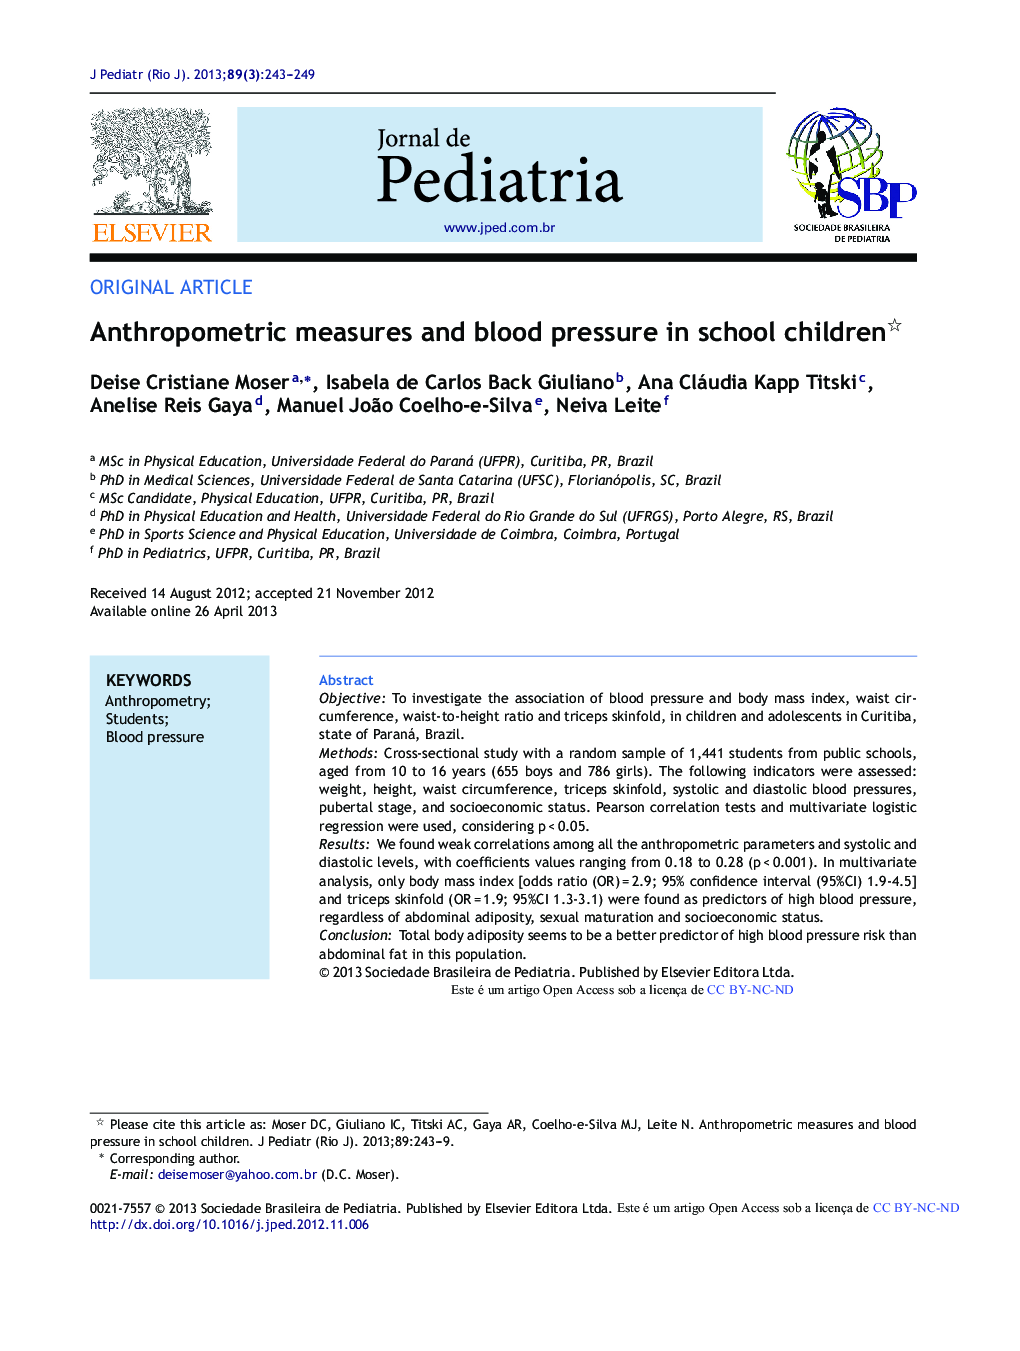 Anthropometric measures and blood pressure in school children 